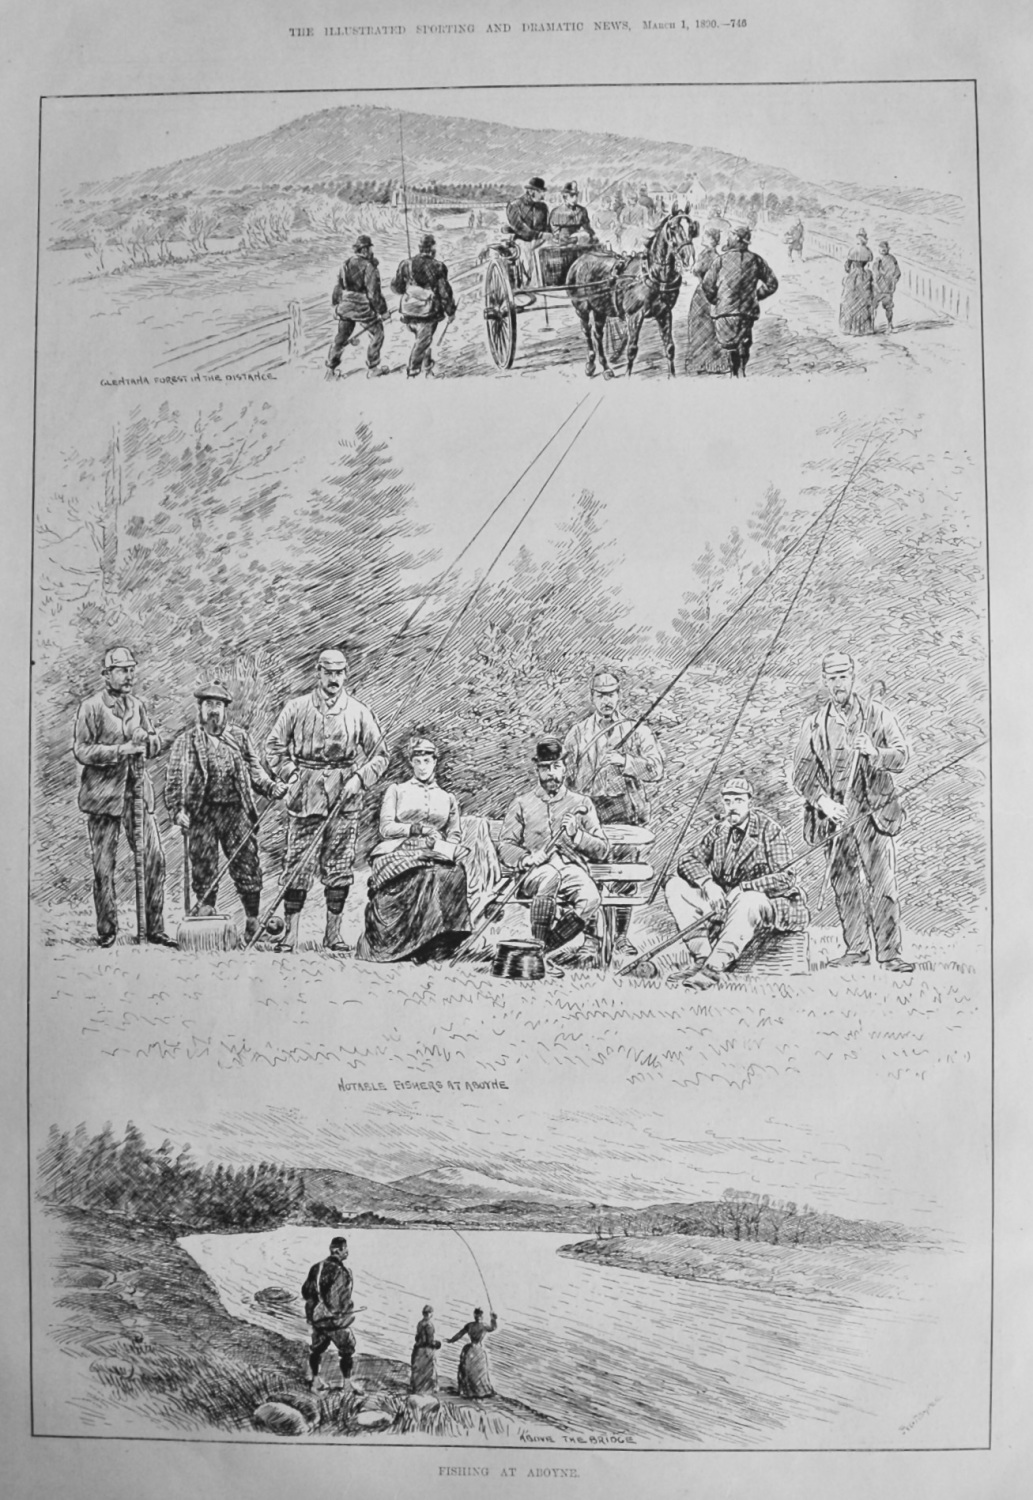 Fishing at Aboyne.  1890.